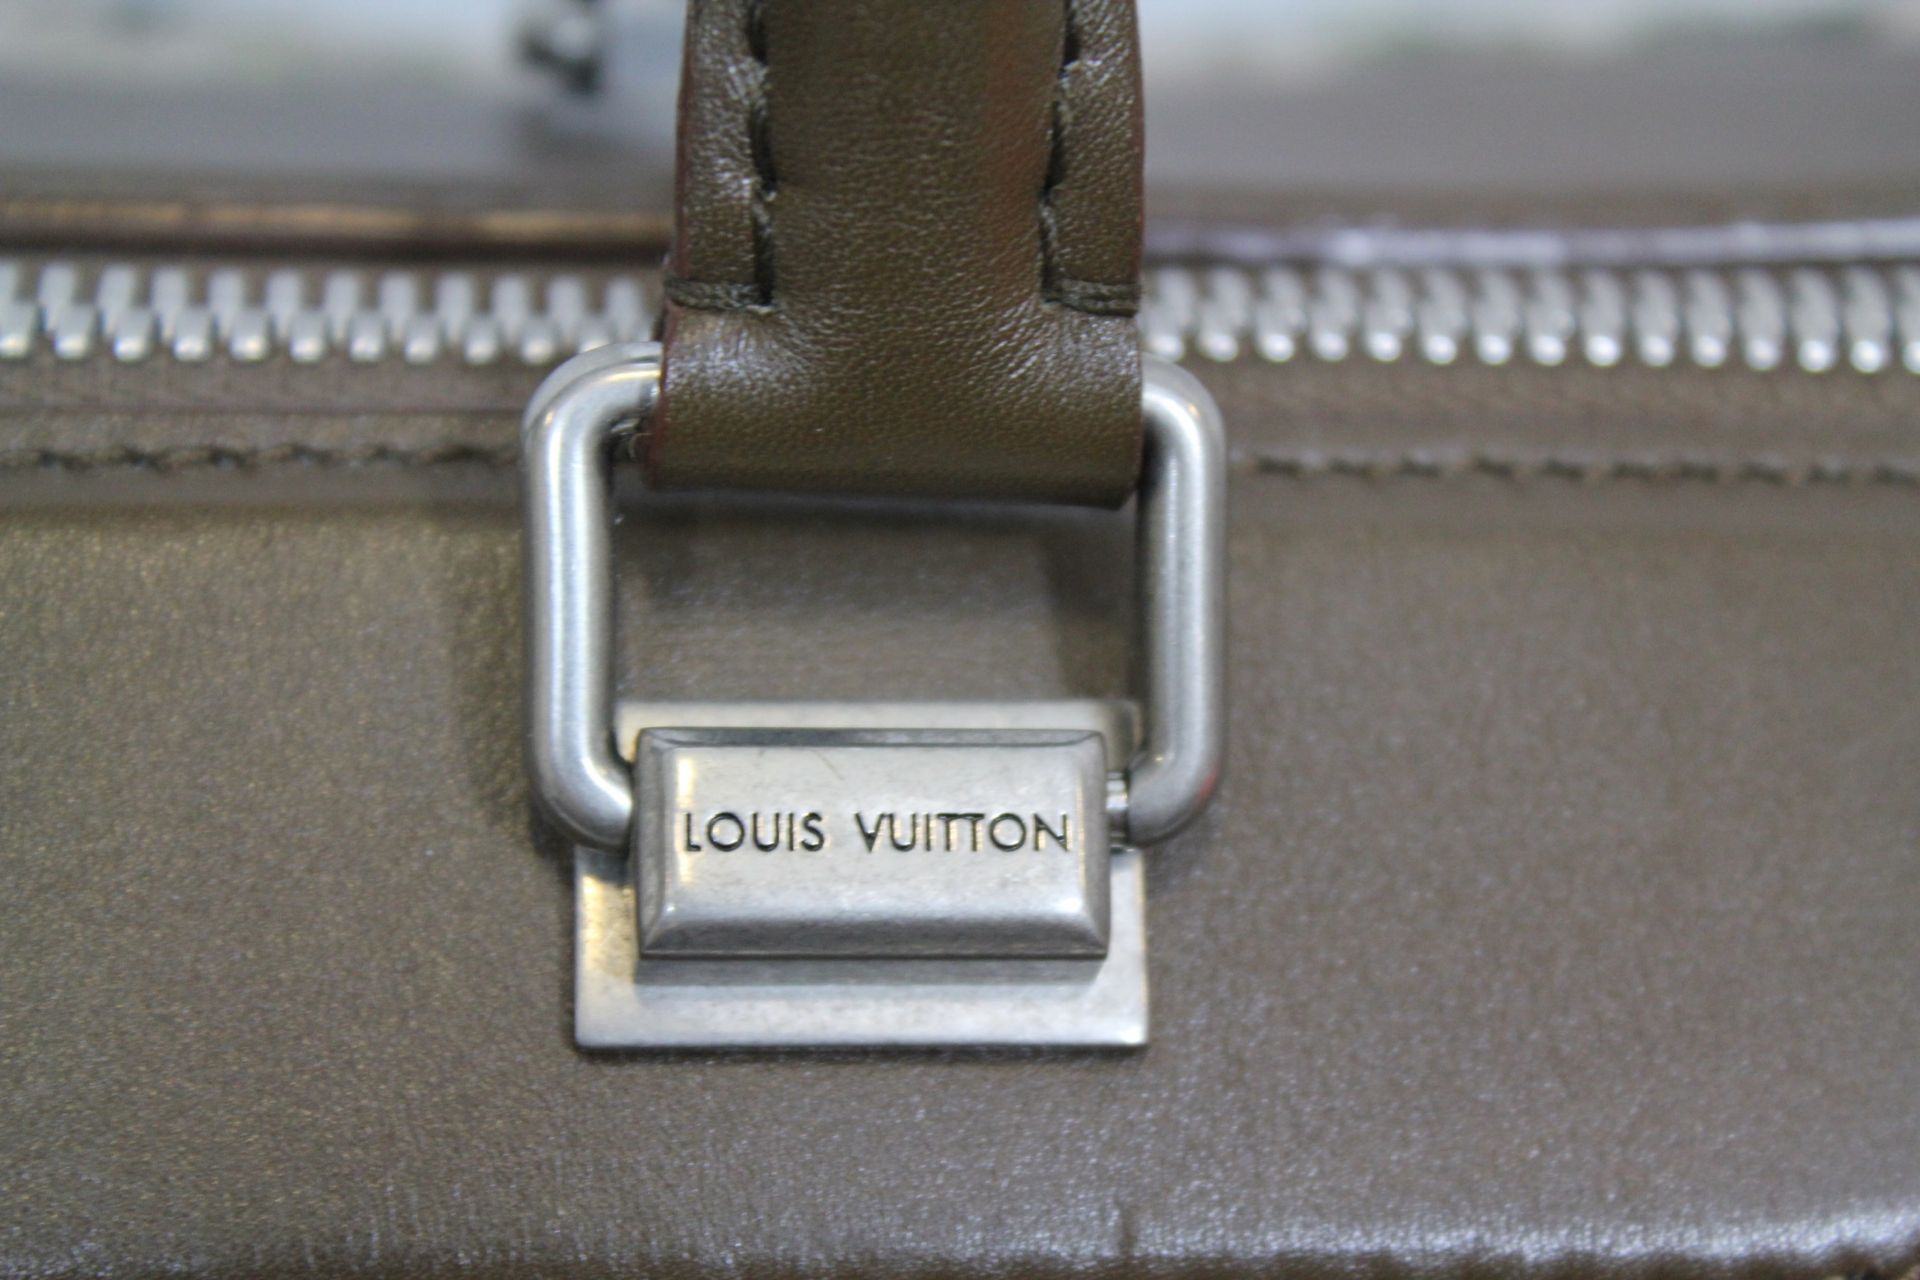 LOUIS VUITTON Limited Edition Khaki Monogram Sunshine Express Speedy Bag - Image 6 of 18